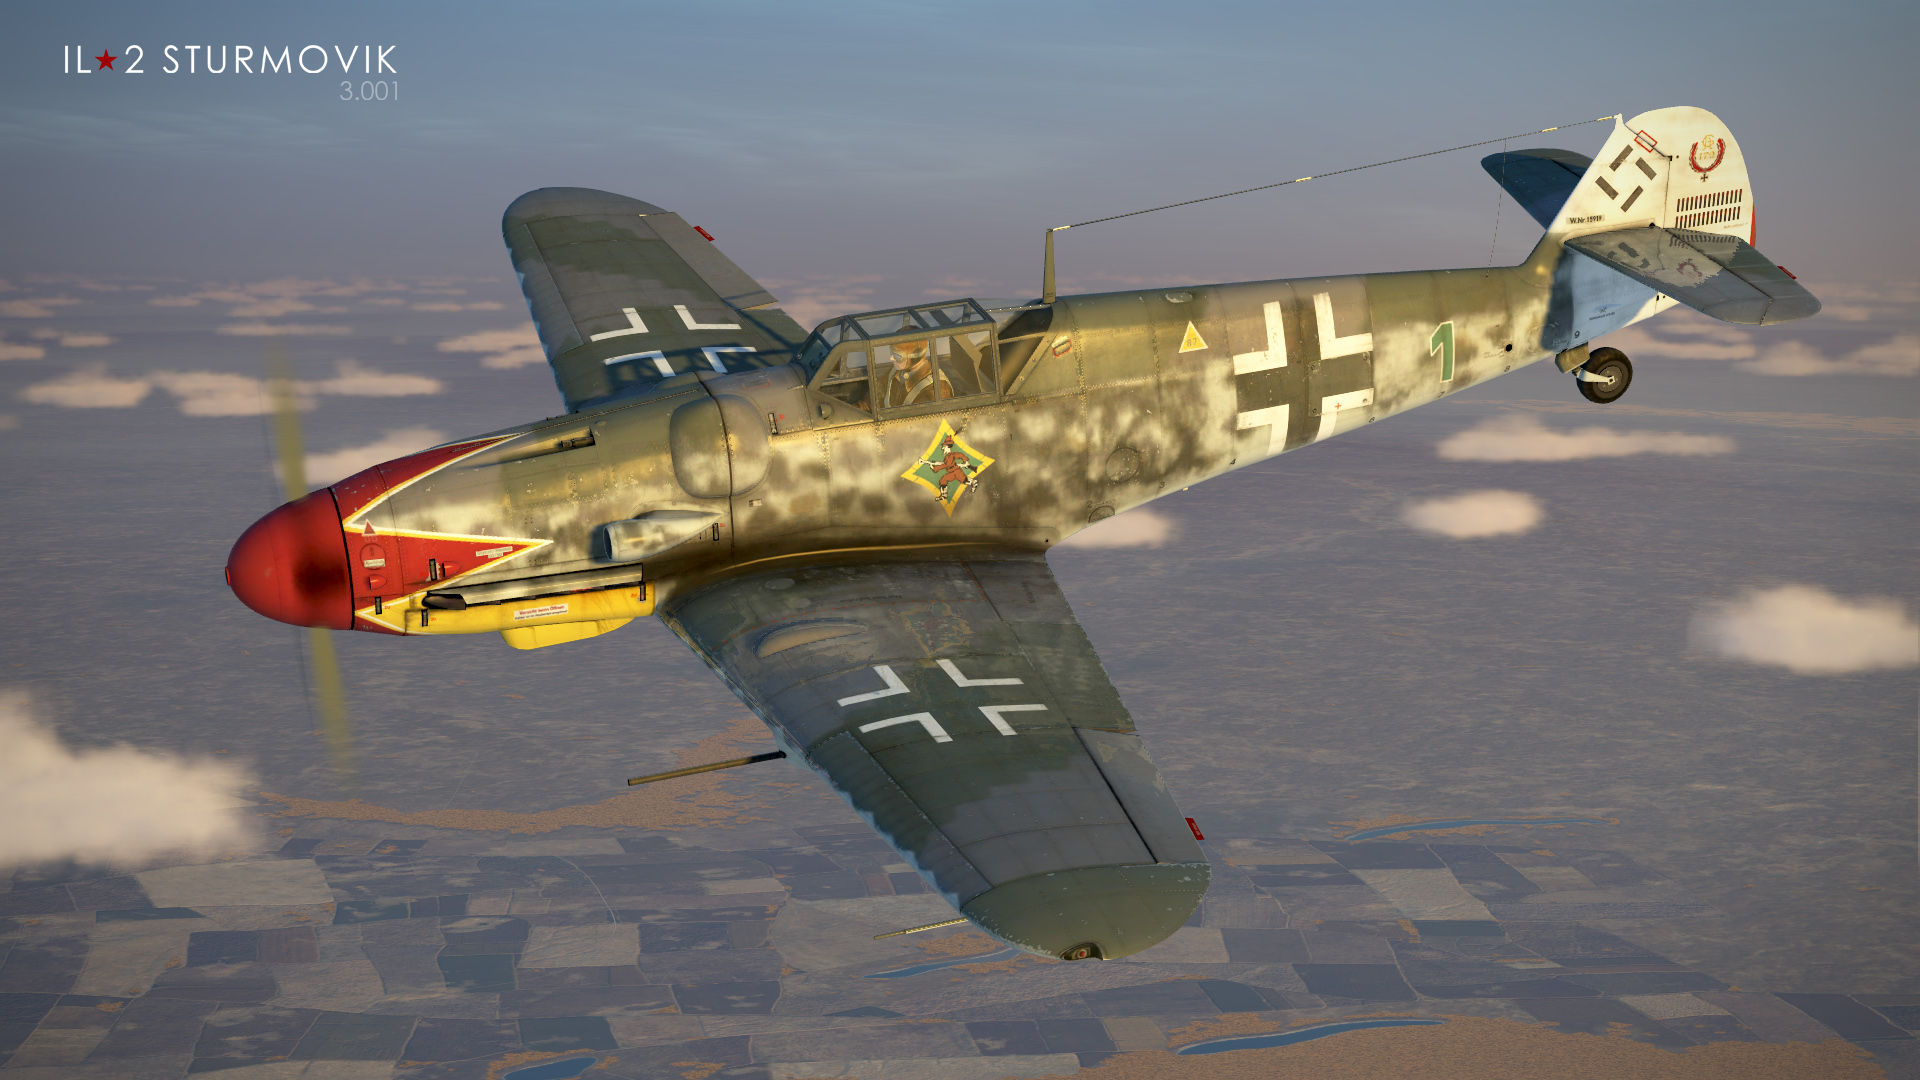 IL-2 Sturmovik: Bf 109 G-6 Collector Plane Featured Screenshot #1